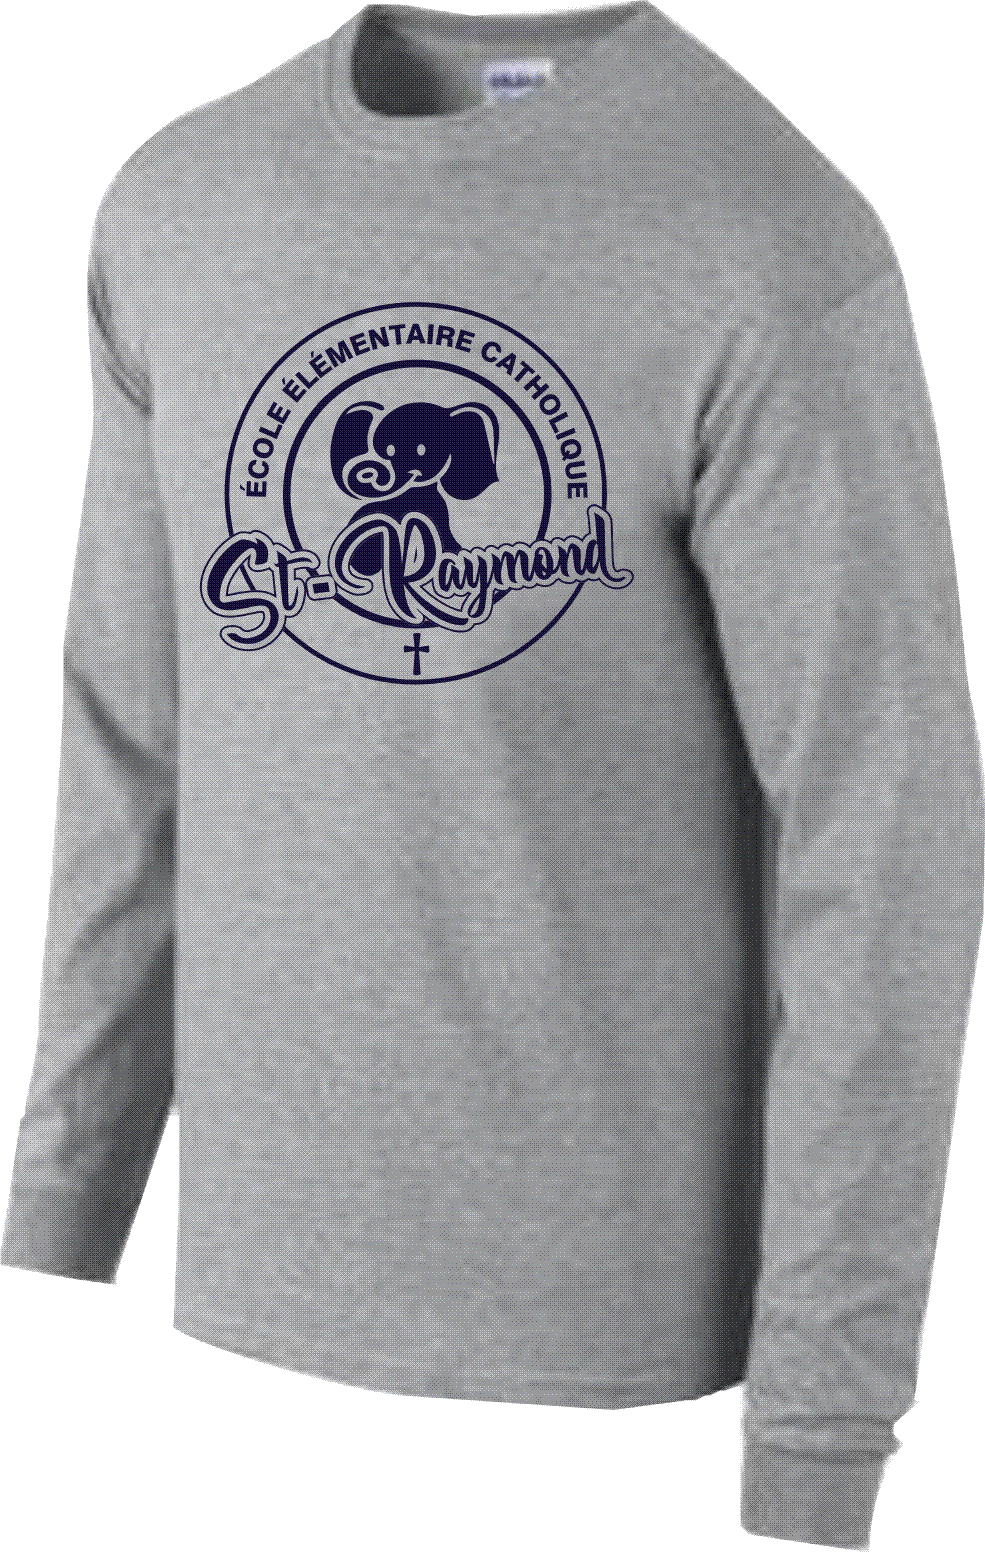 St Raymond Long Sleeve Shirt